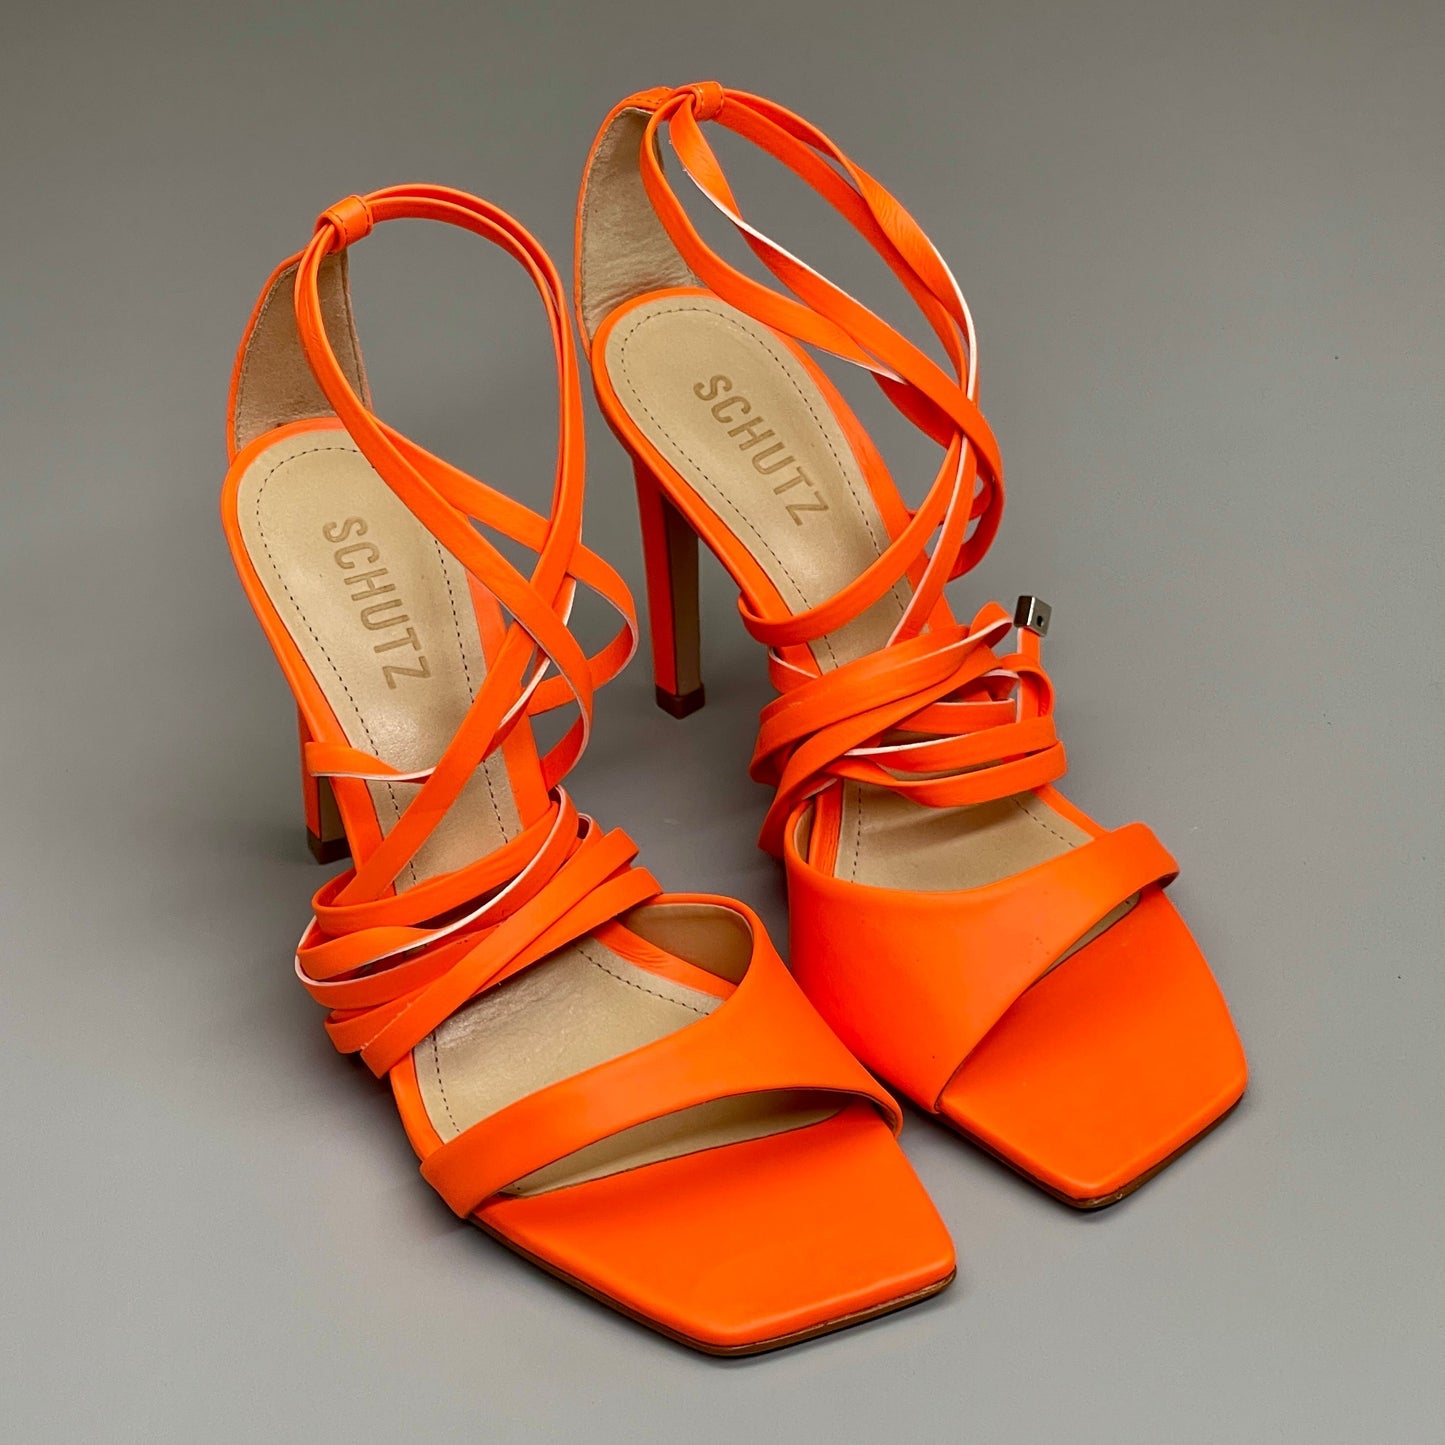 SCHUTZ Bryce Ankle Tie Women's High Heel Leather Strappy Sandal Acid Orange Sz10 (New)